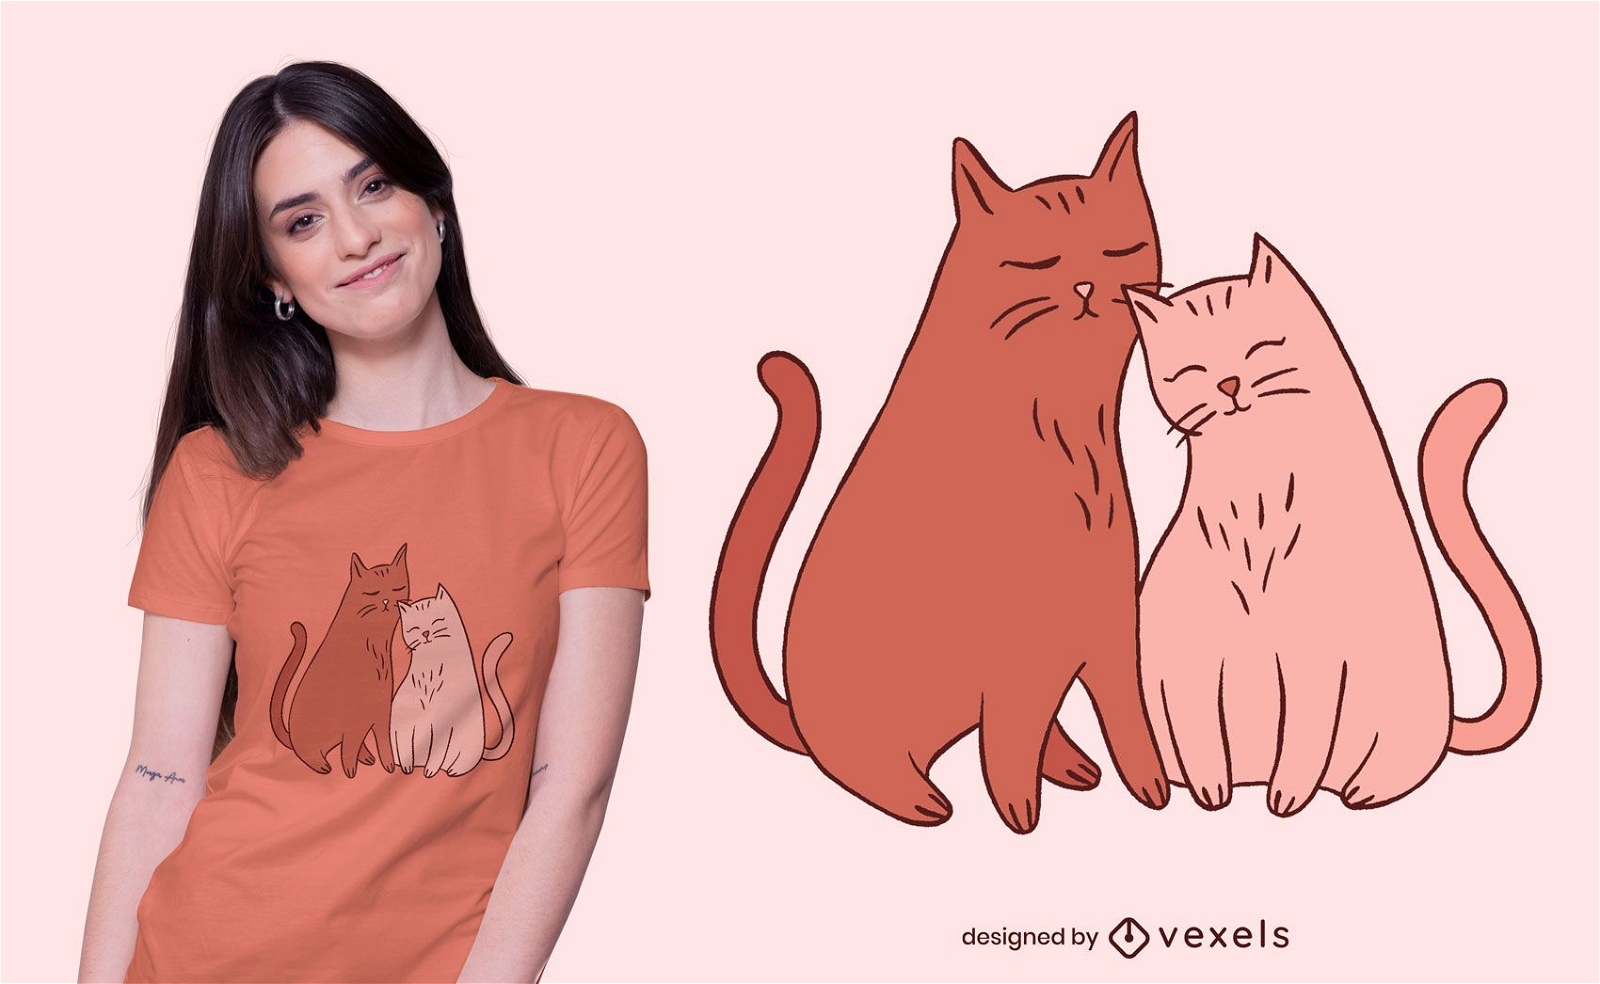 Lindo dise?o de camiseta de amantes de los gatos.